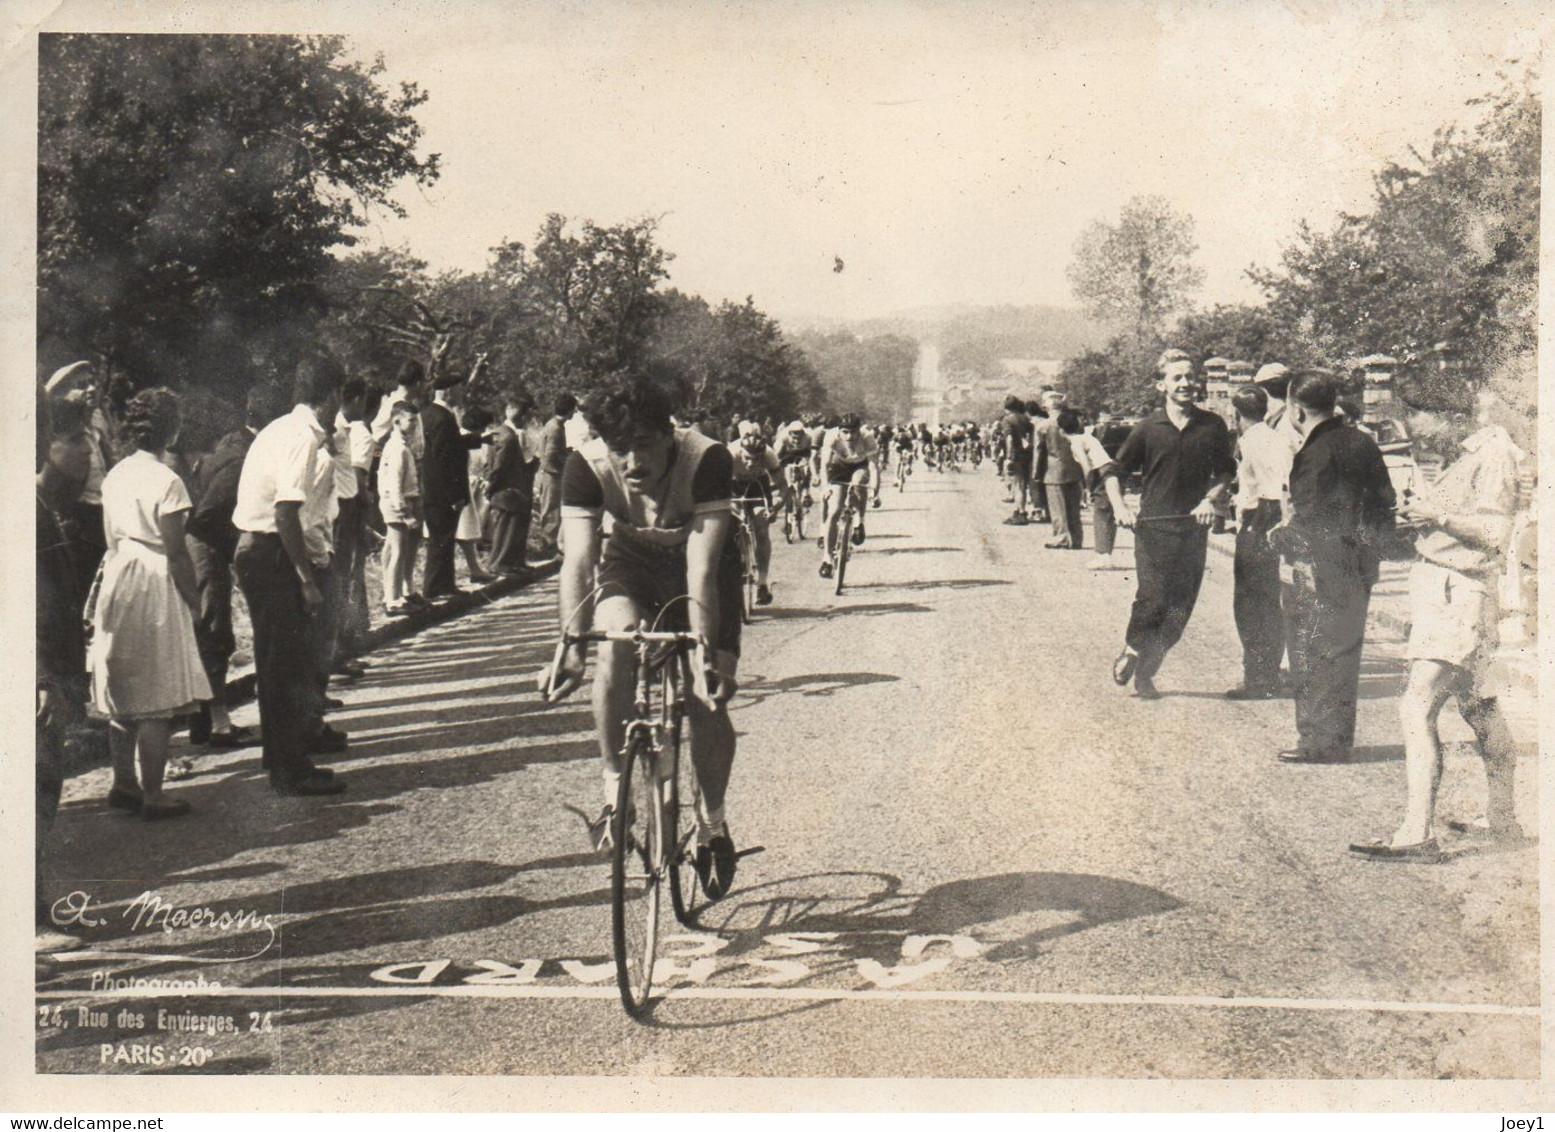 Photo 13/18 Course De Vélos Années 50 ,Macron Photo CV 19ème Gobillot - Wielrennen